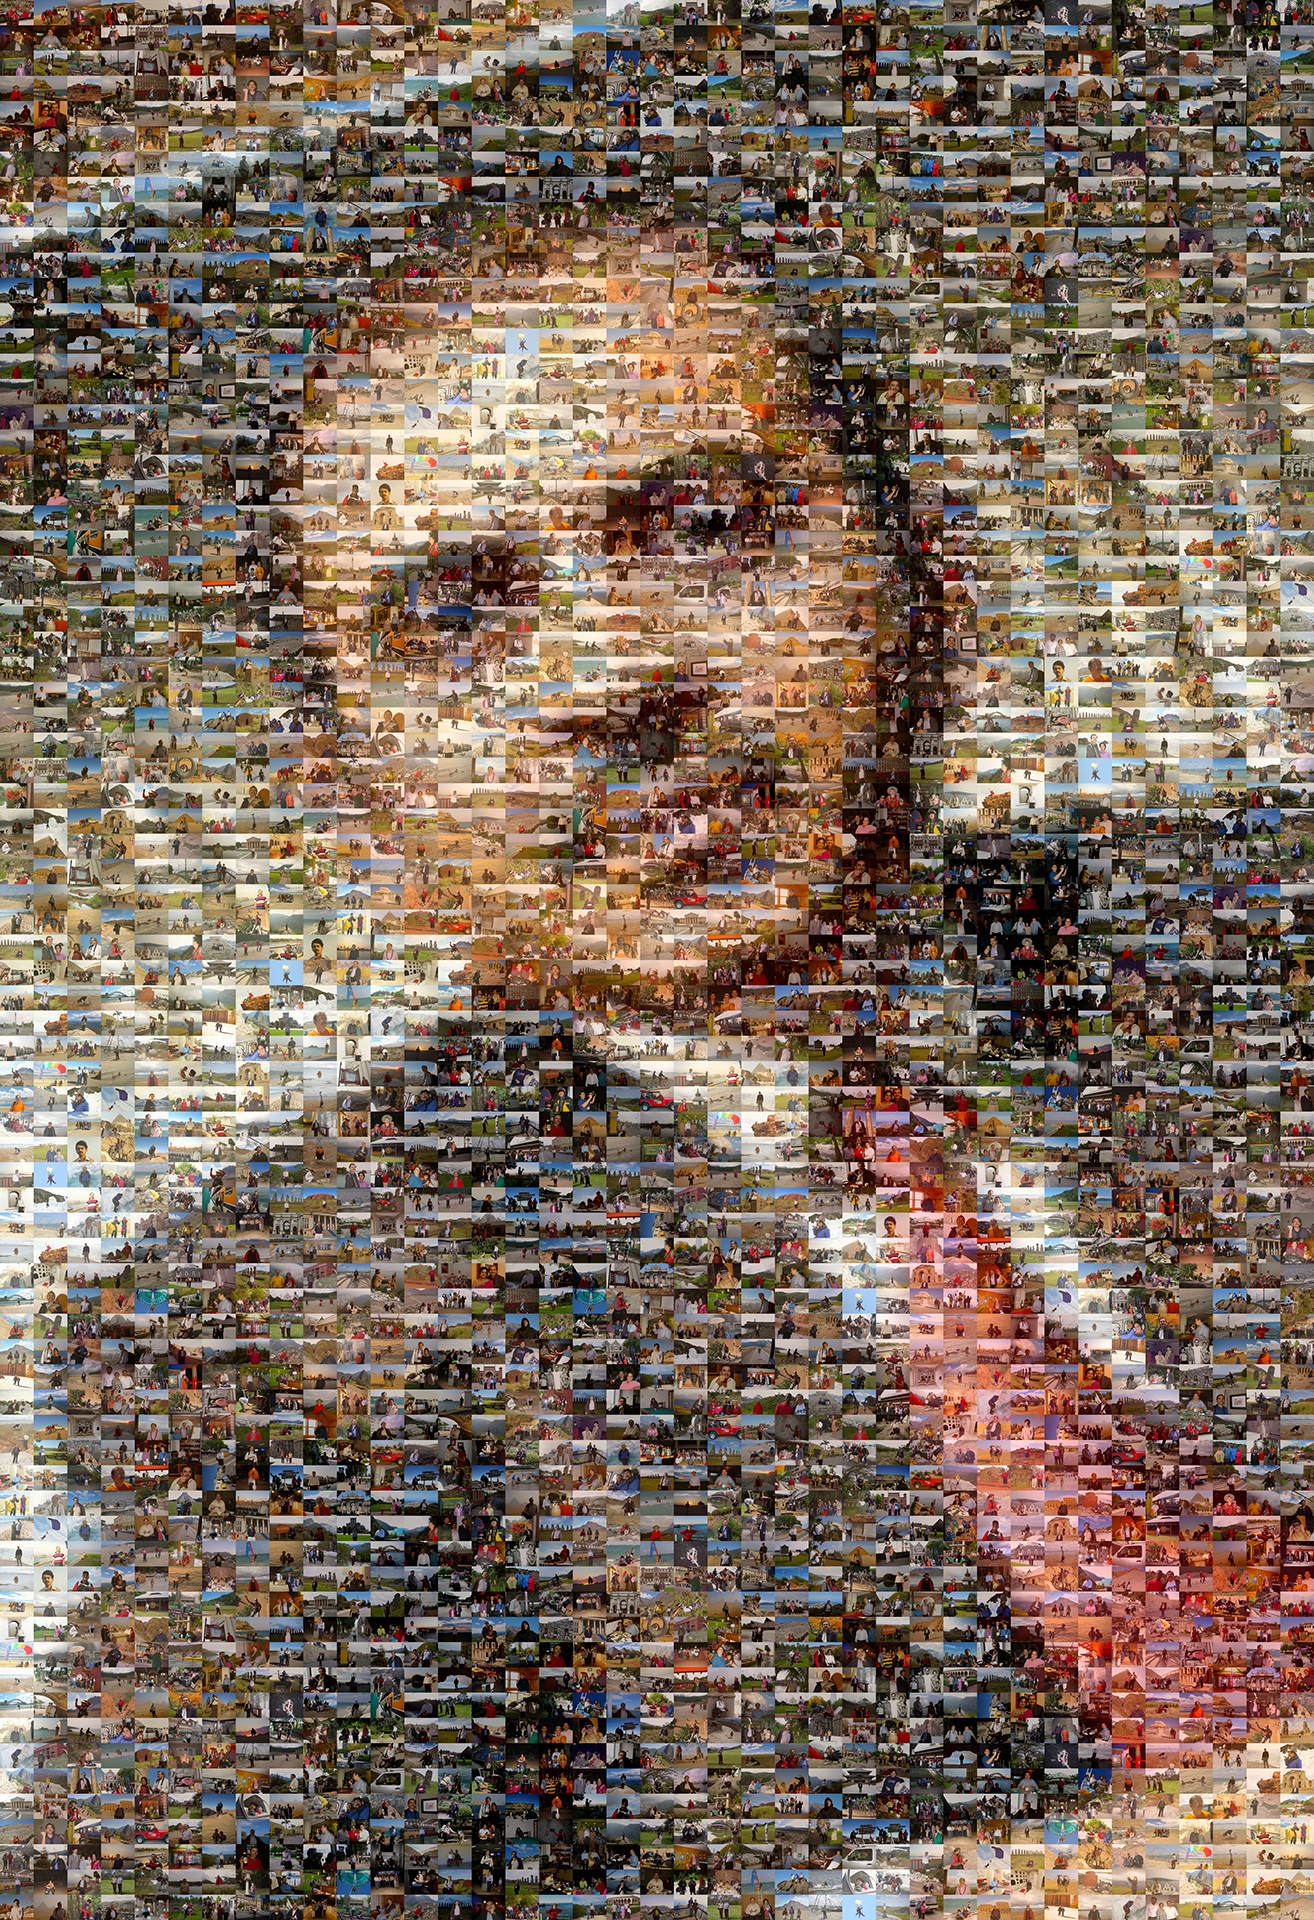 photo mosaic created using 550 Lifetime photos